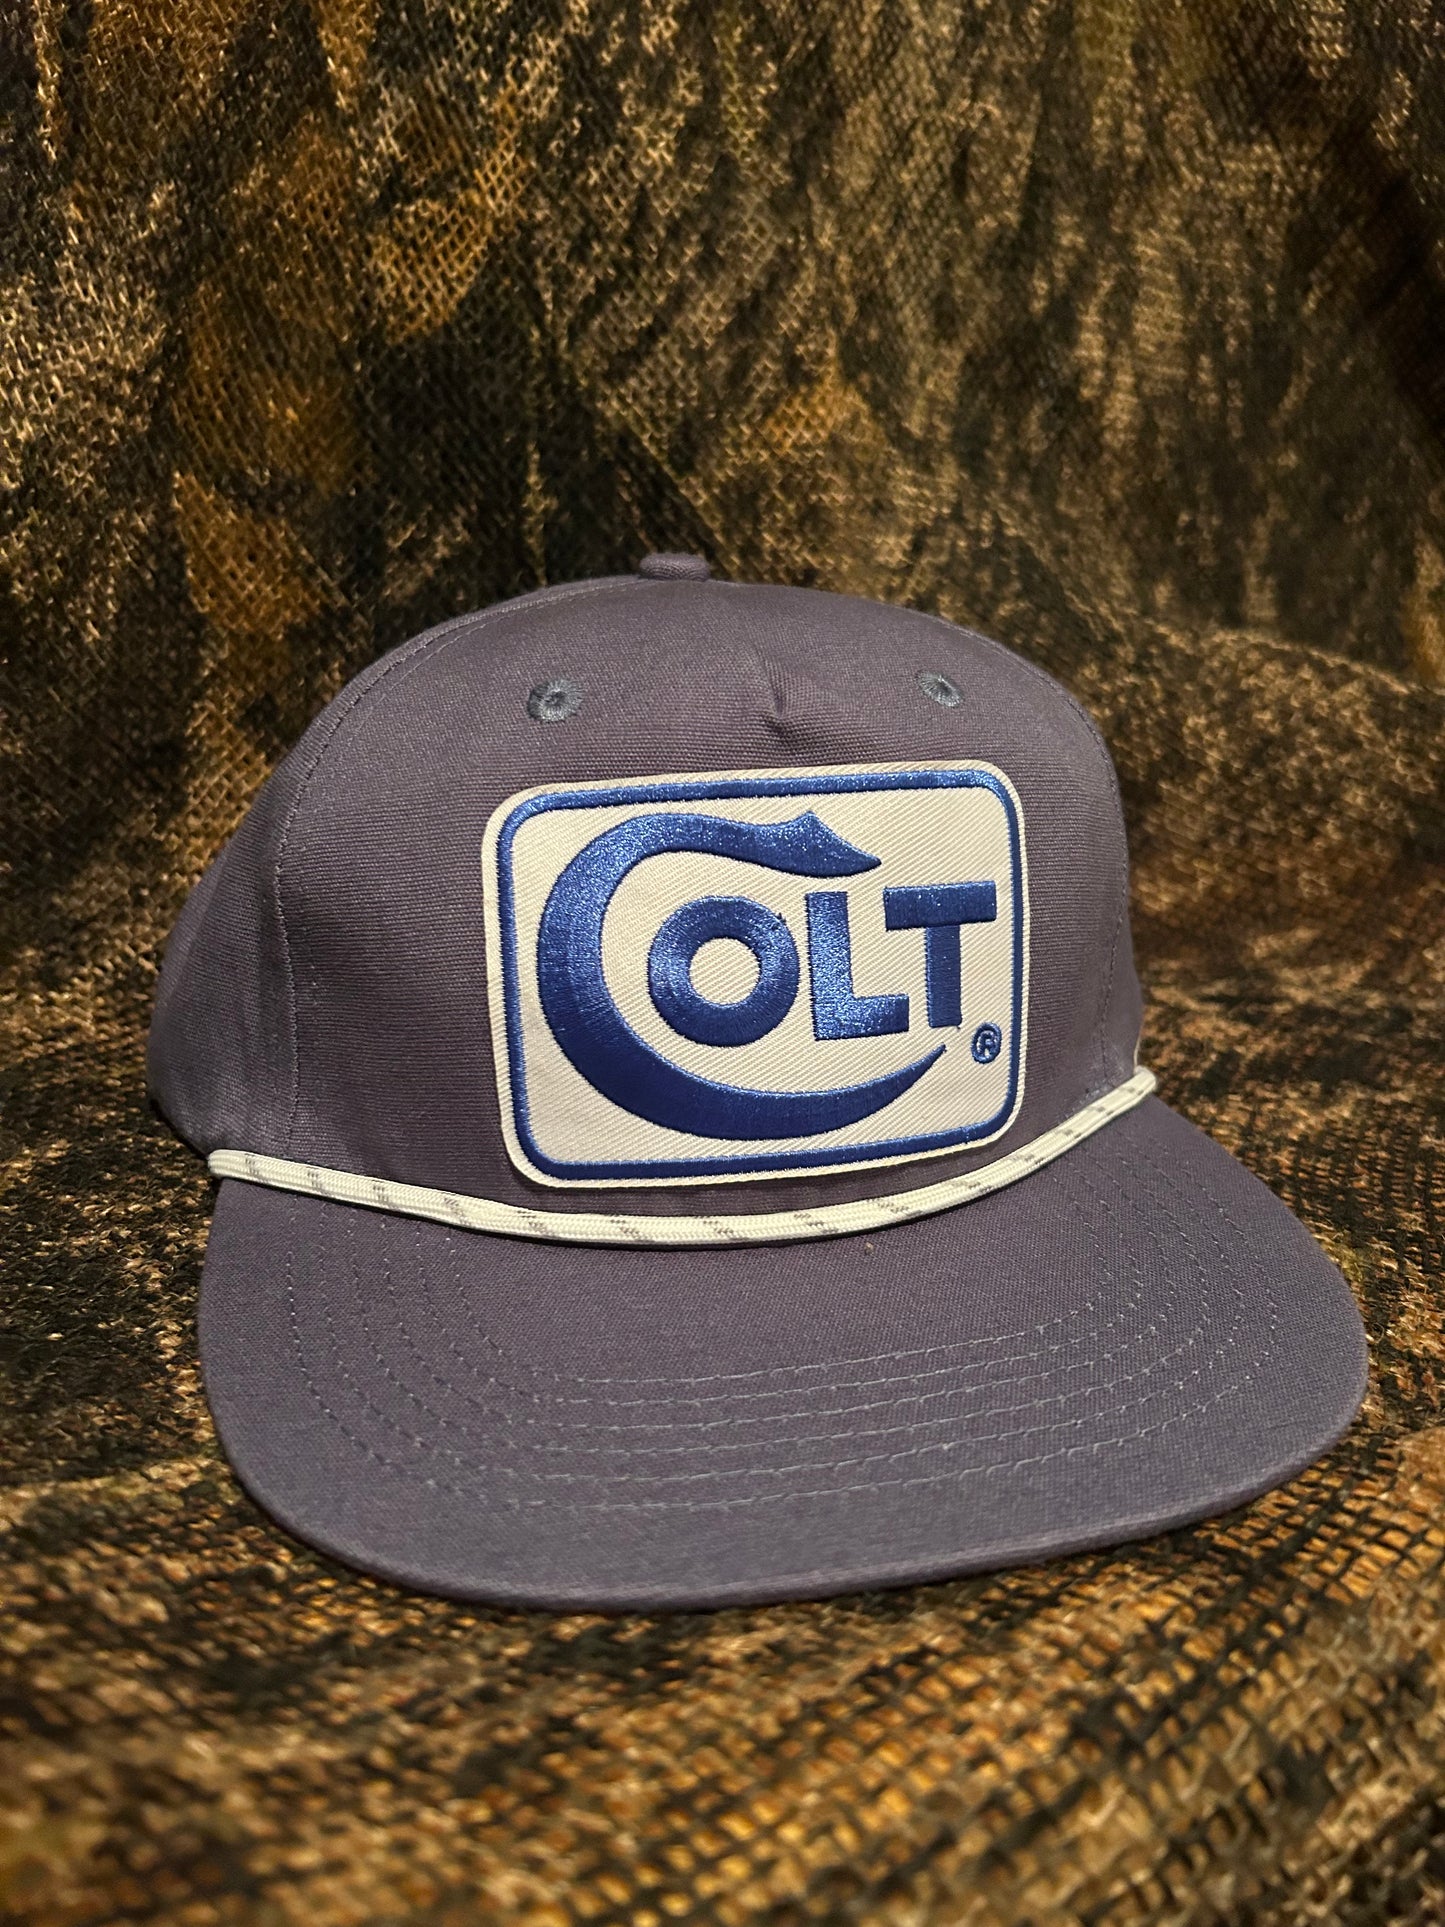 Colt Firearms retro vintage navy blue SnapBack hat